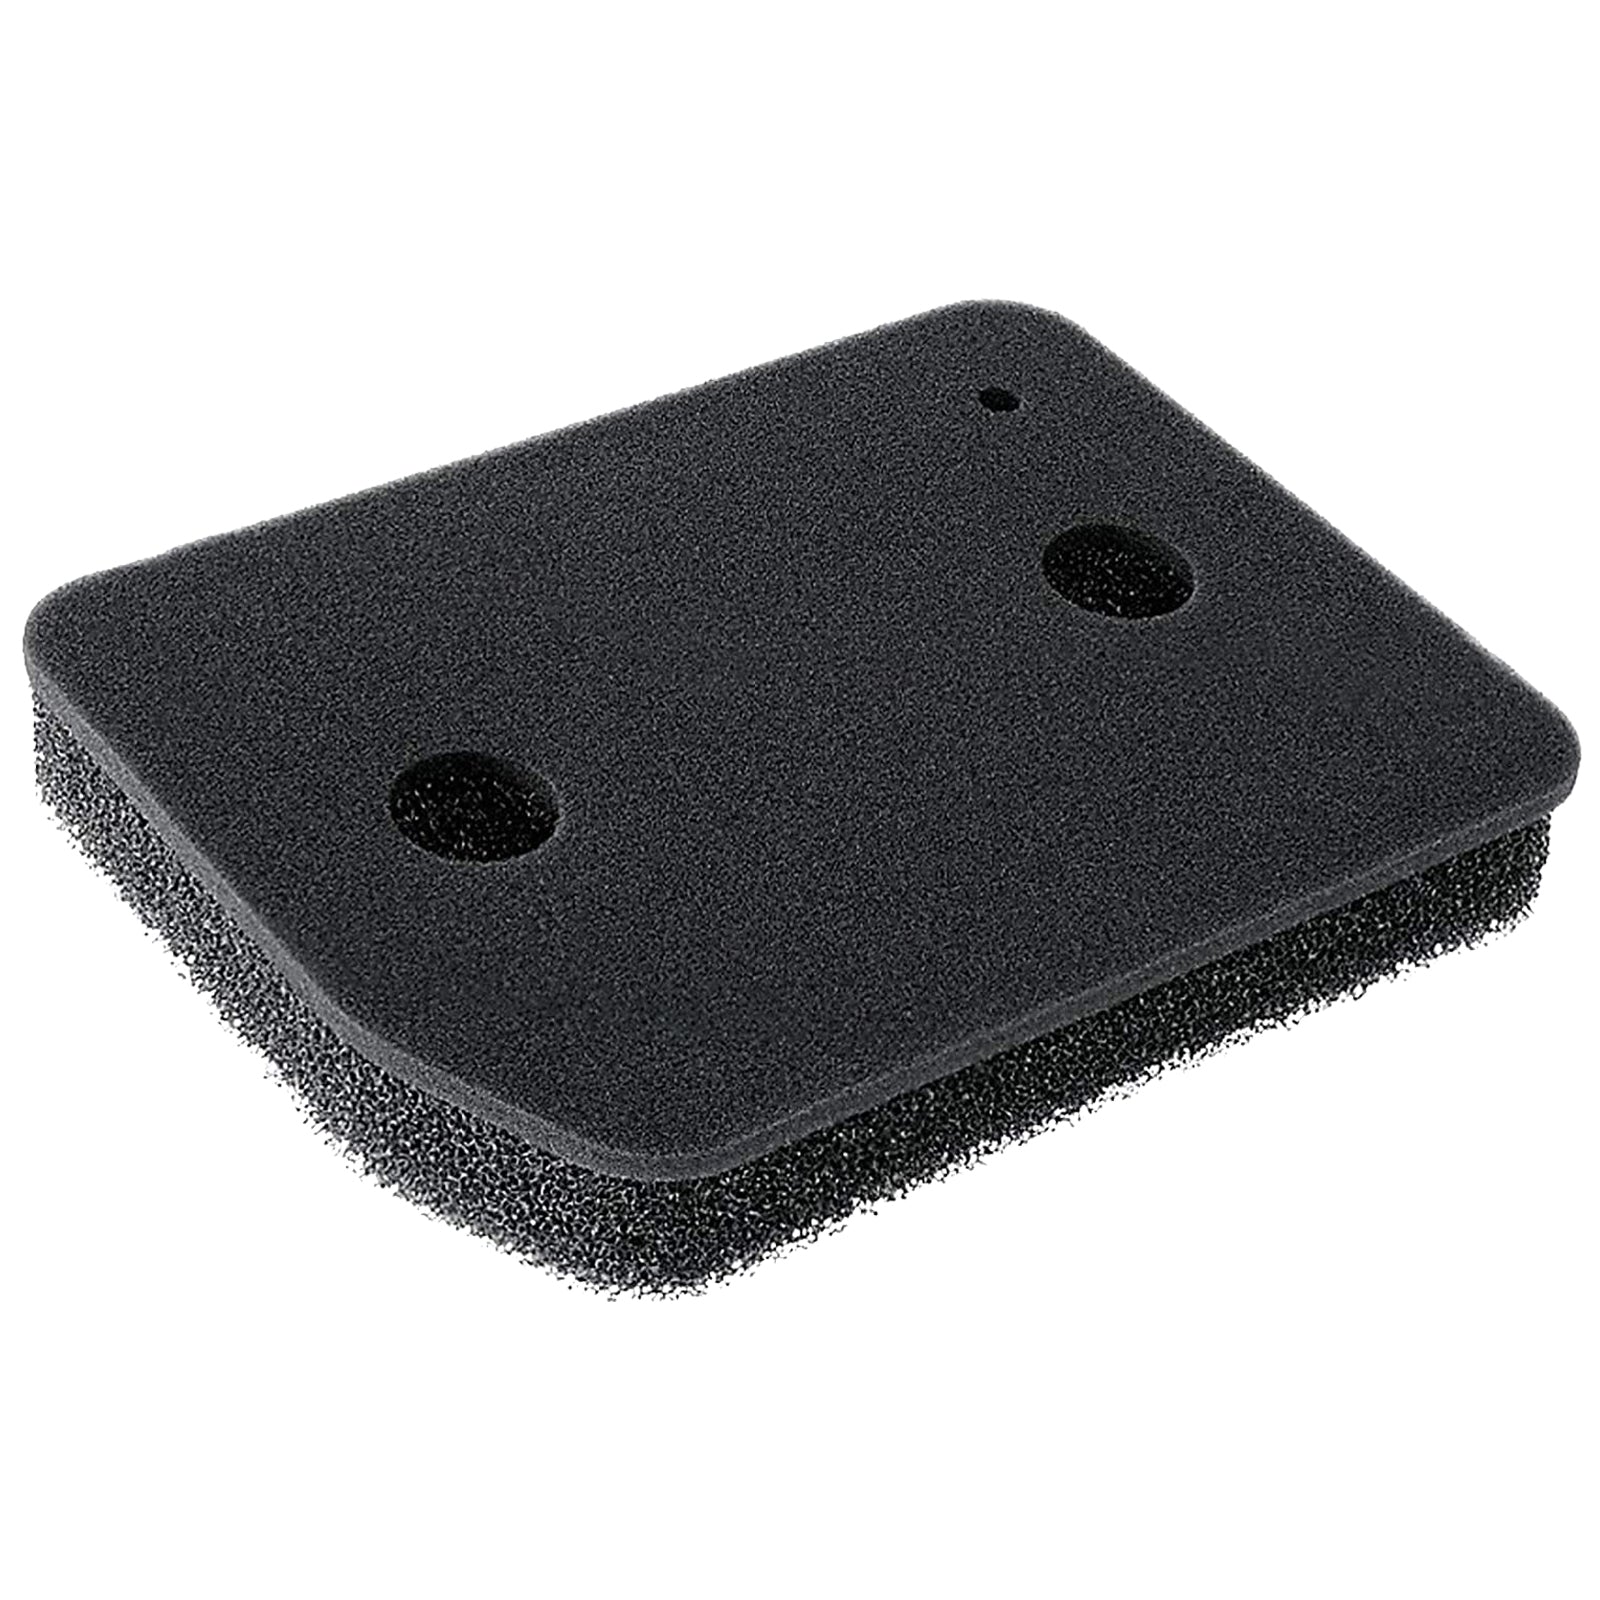 Condenser Module Foam Filter Sponge for MIELE Tumble Dryer